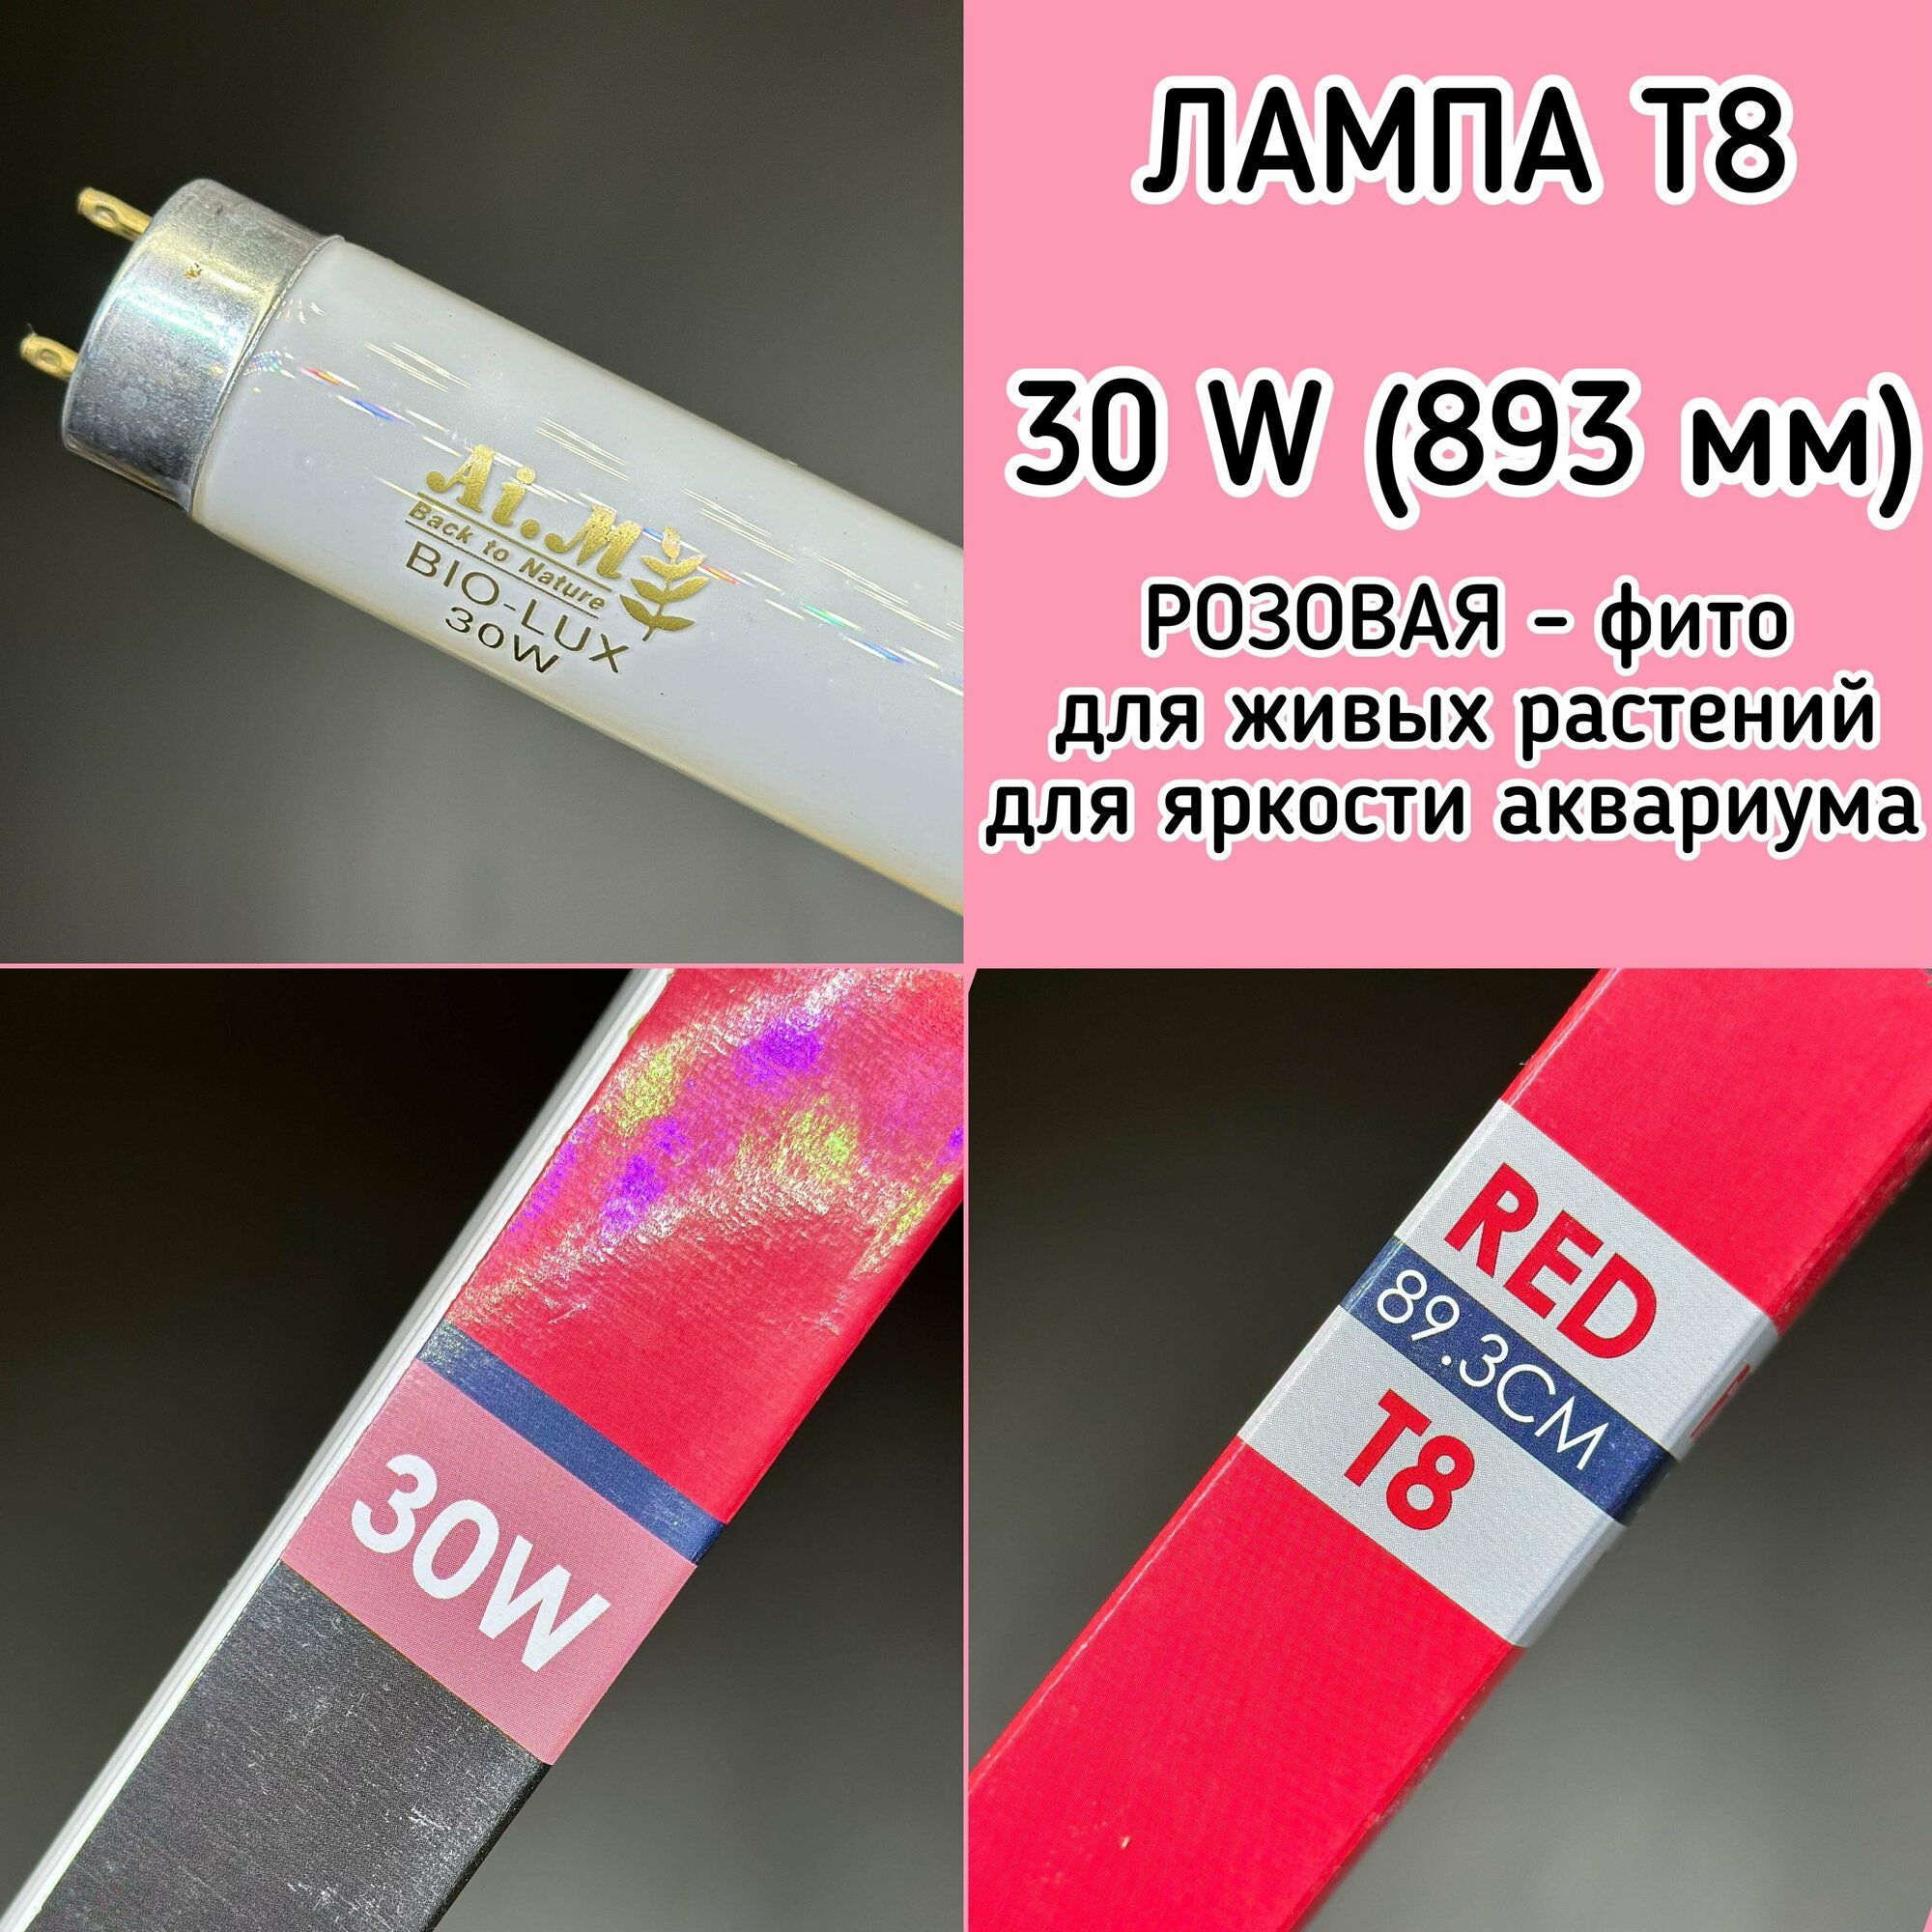 Лампа Т8 30W (893 мм) BIO LUX розовая / фито лампа для живых растений, яркости аквариума, люминисцентная